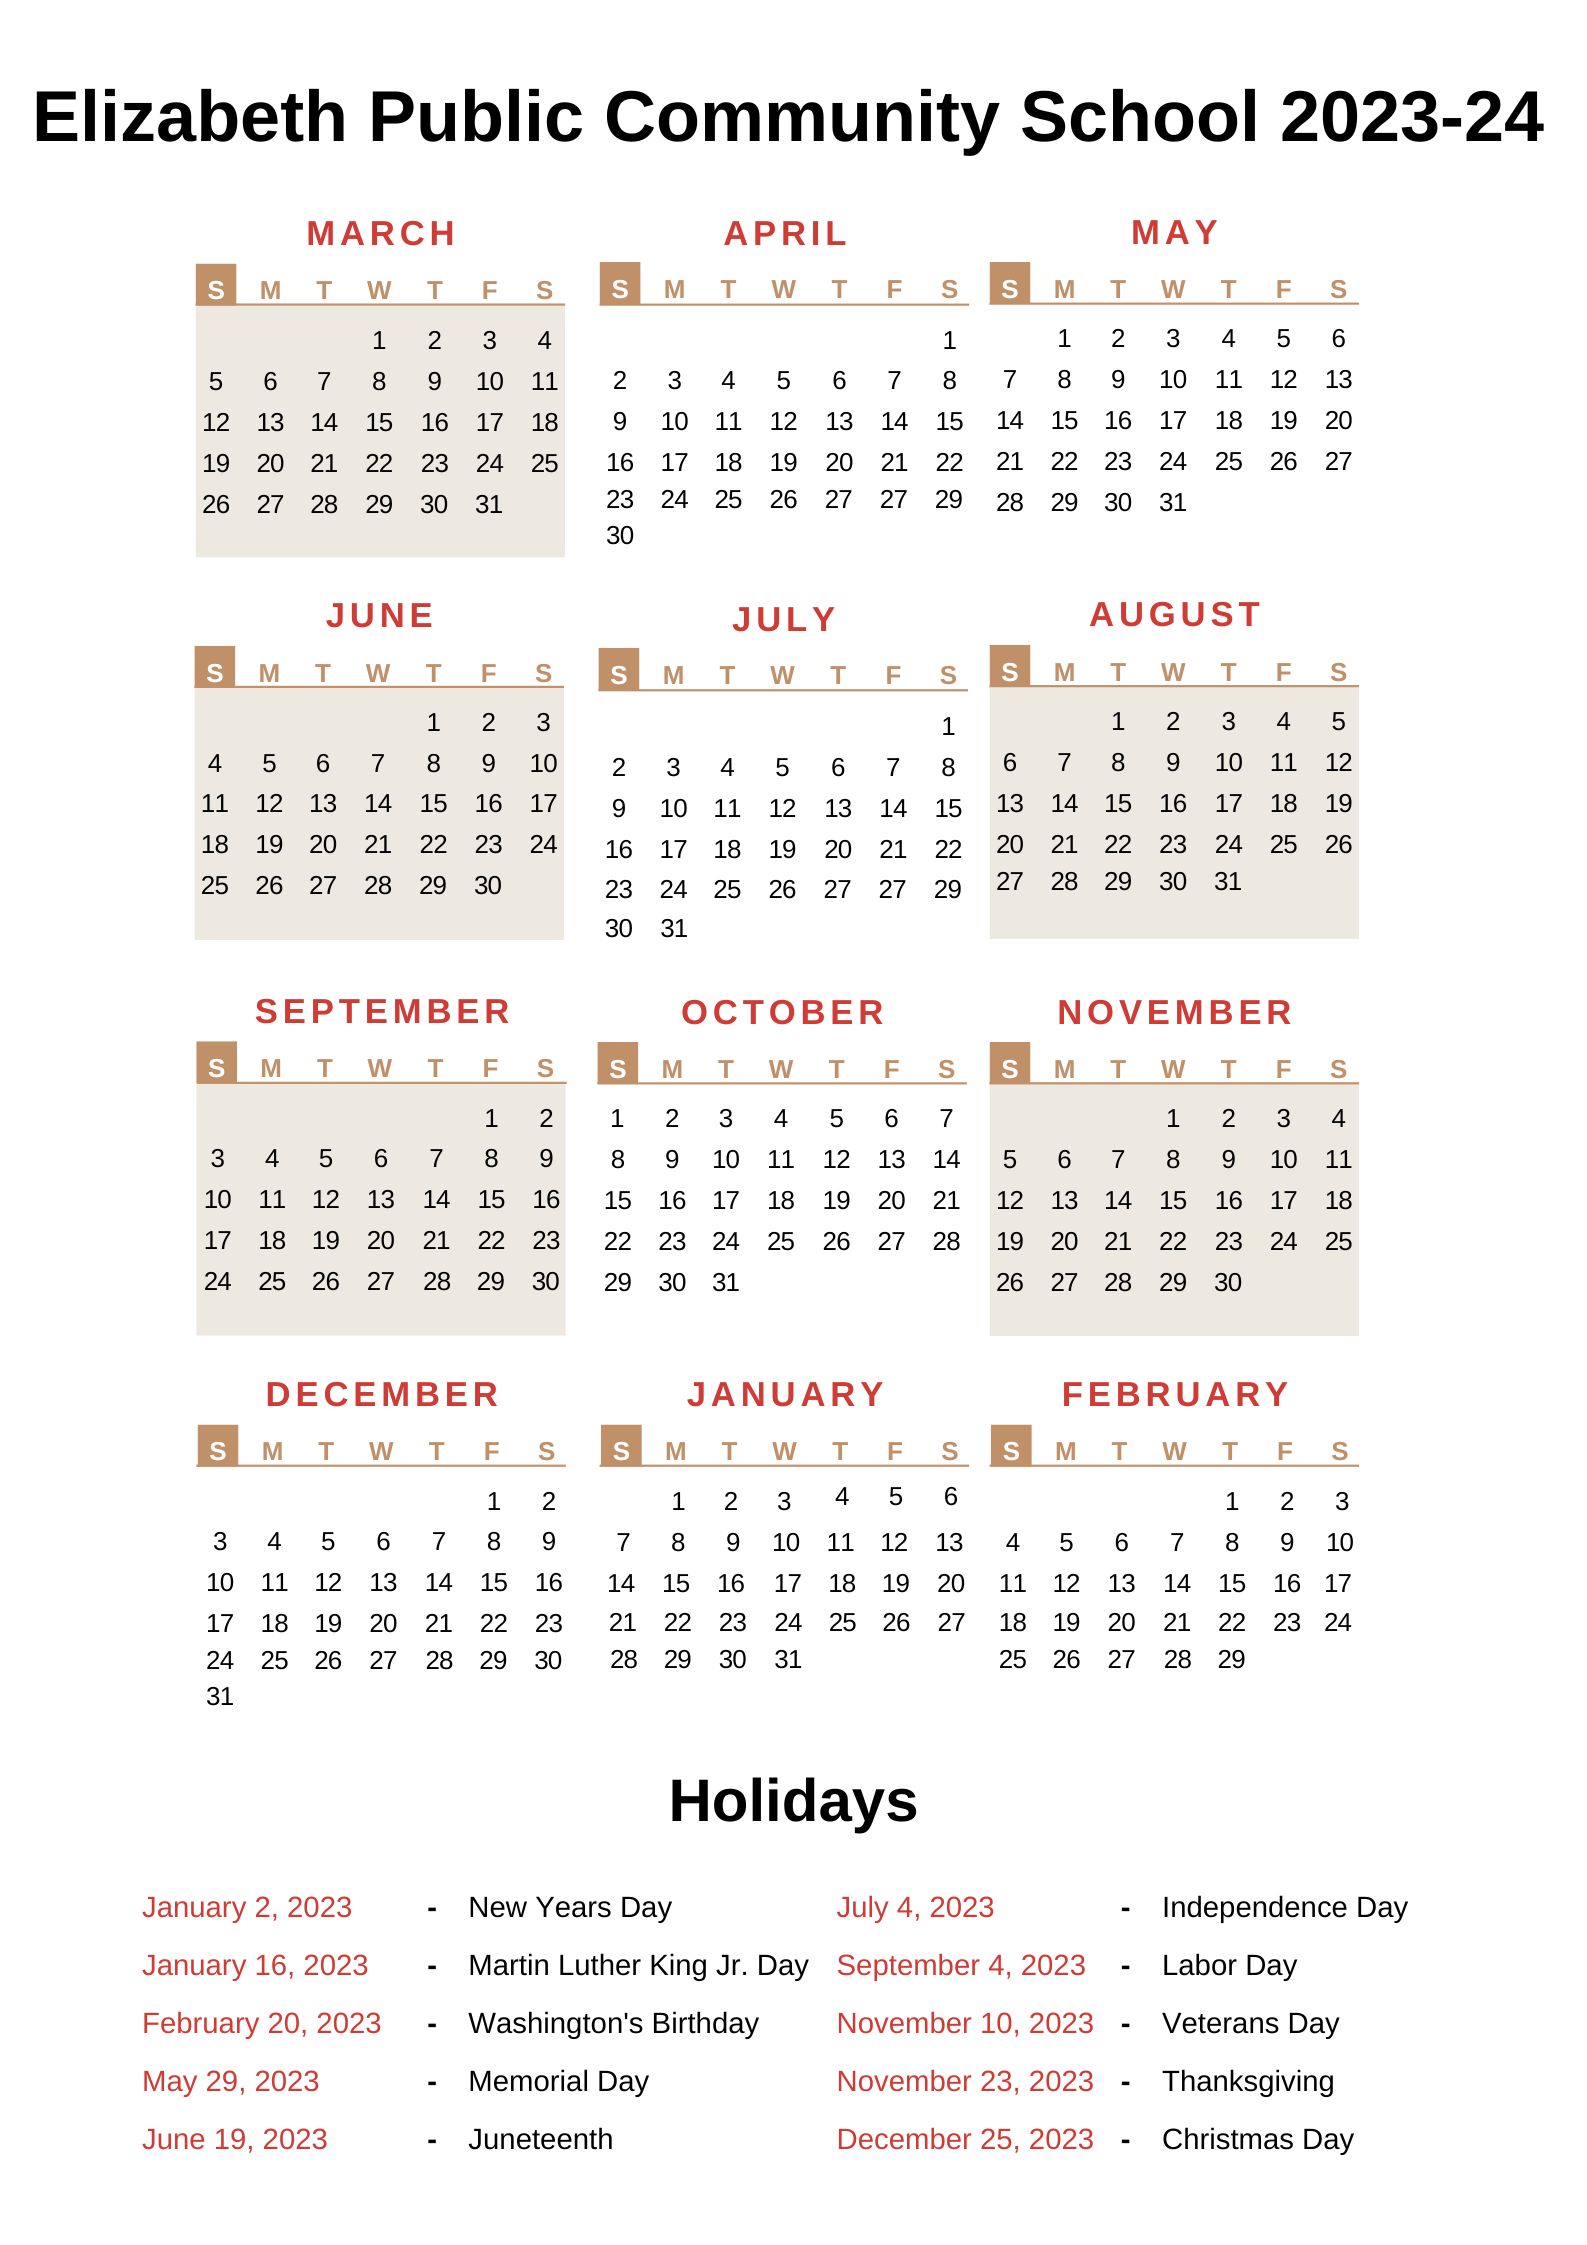 Elizabeth Public Schools Calendar 202324 [EPS] with Holidays